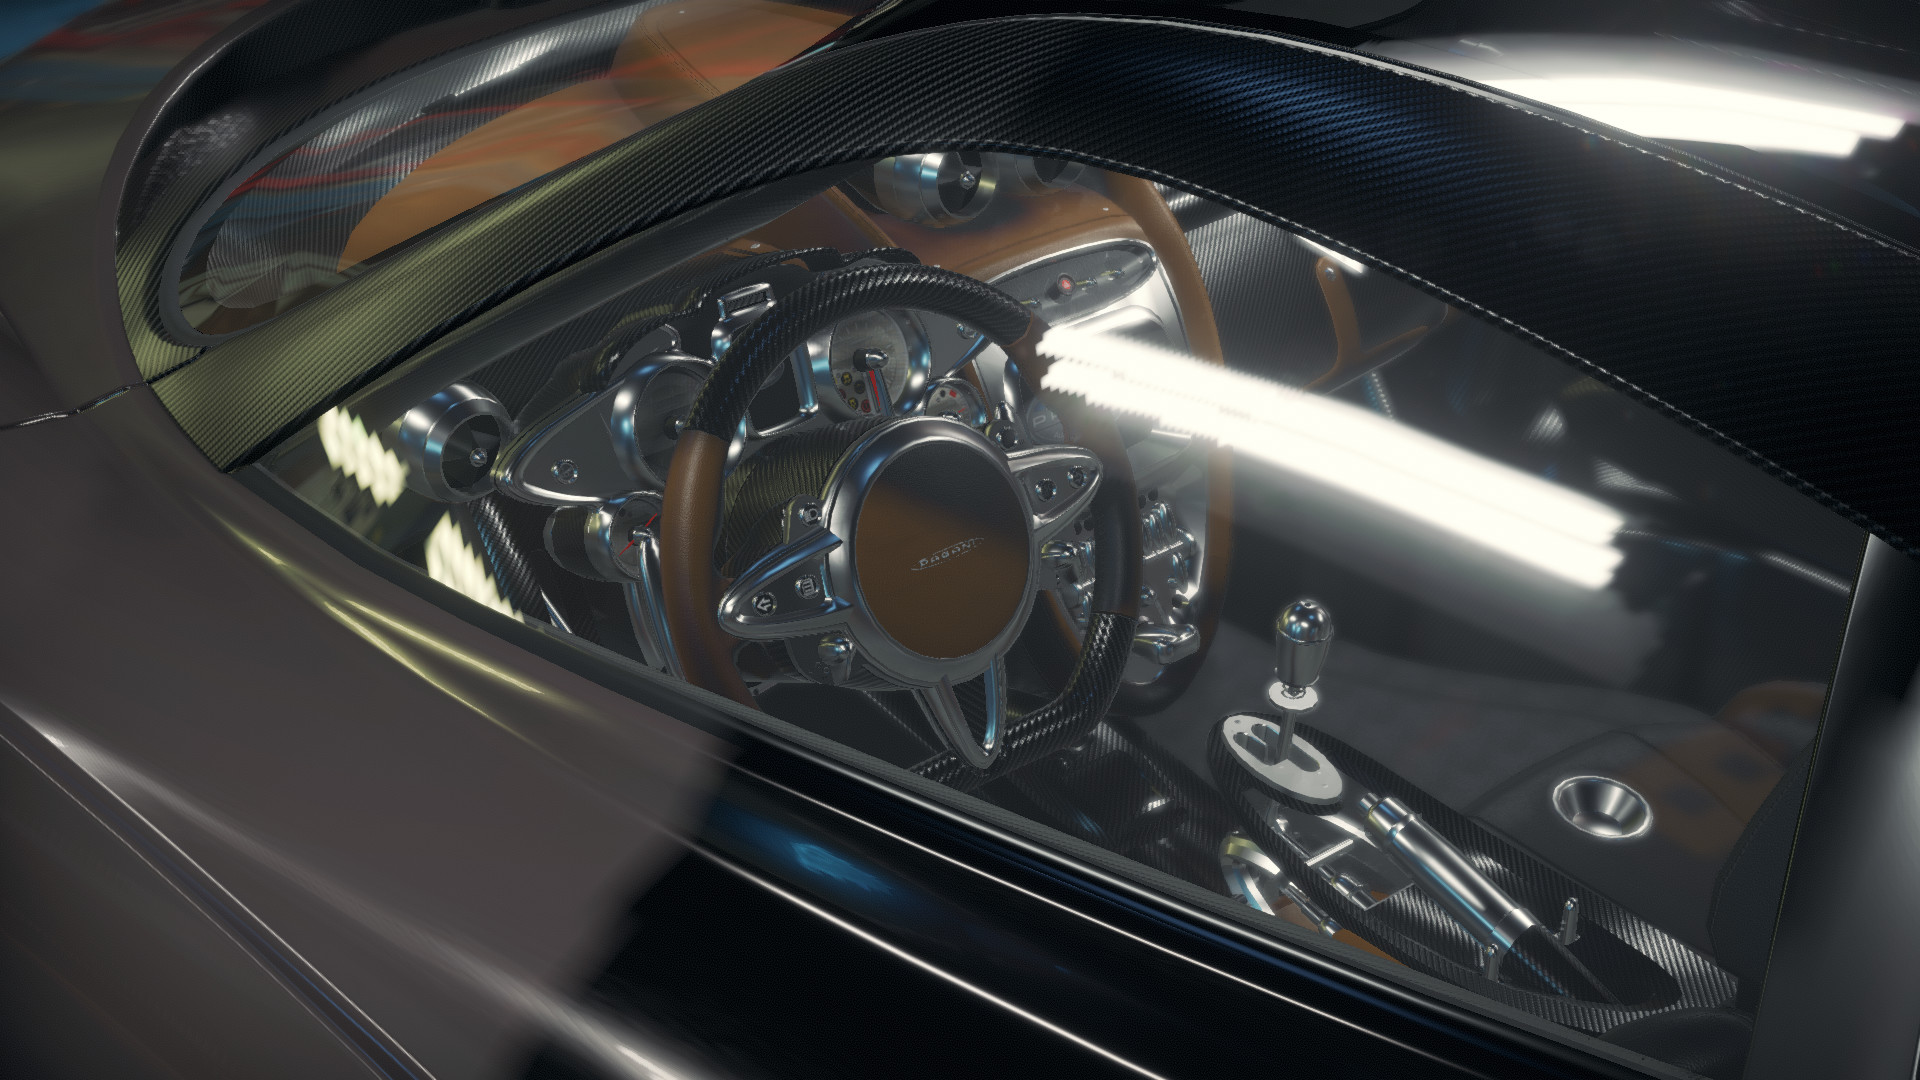 Car Mechanic Simulator 2018 - Pagani DLC screenshot